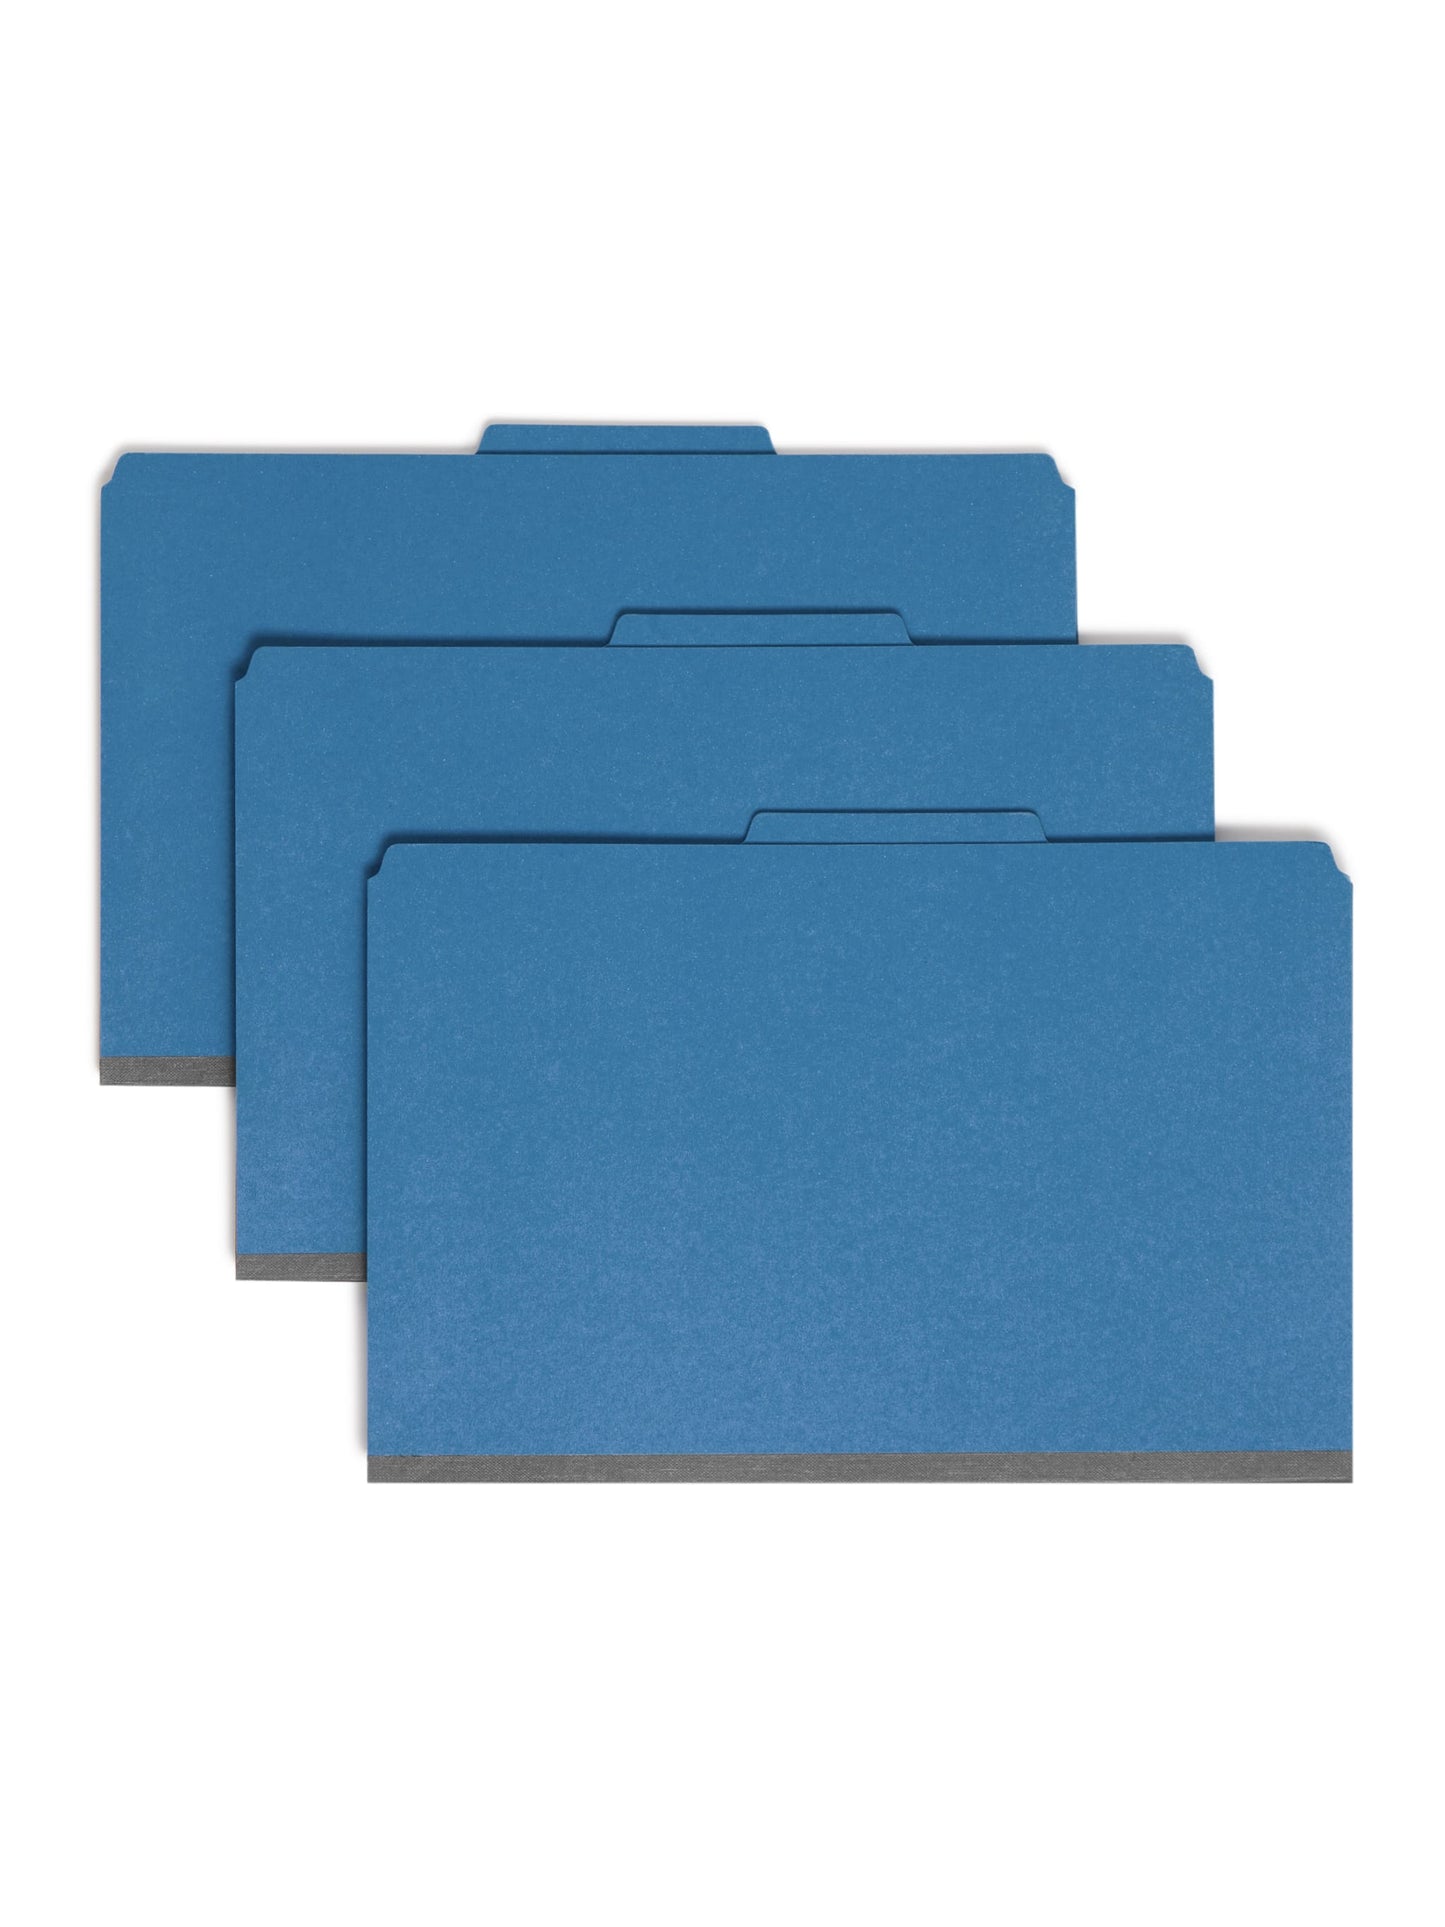 SafeSHIELD® Pressboard Classification File Folders, 3 Dividers, 3 inch Expansion, 2/5-Cut Tab, Dark Blue Color, Legal Size, Set of 0, 30086486190962